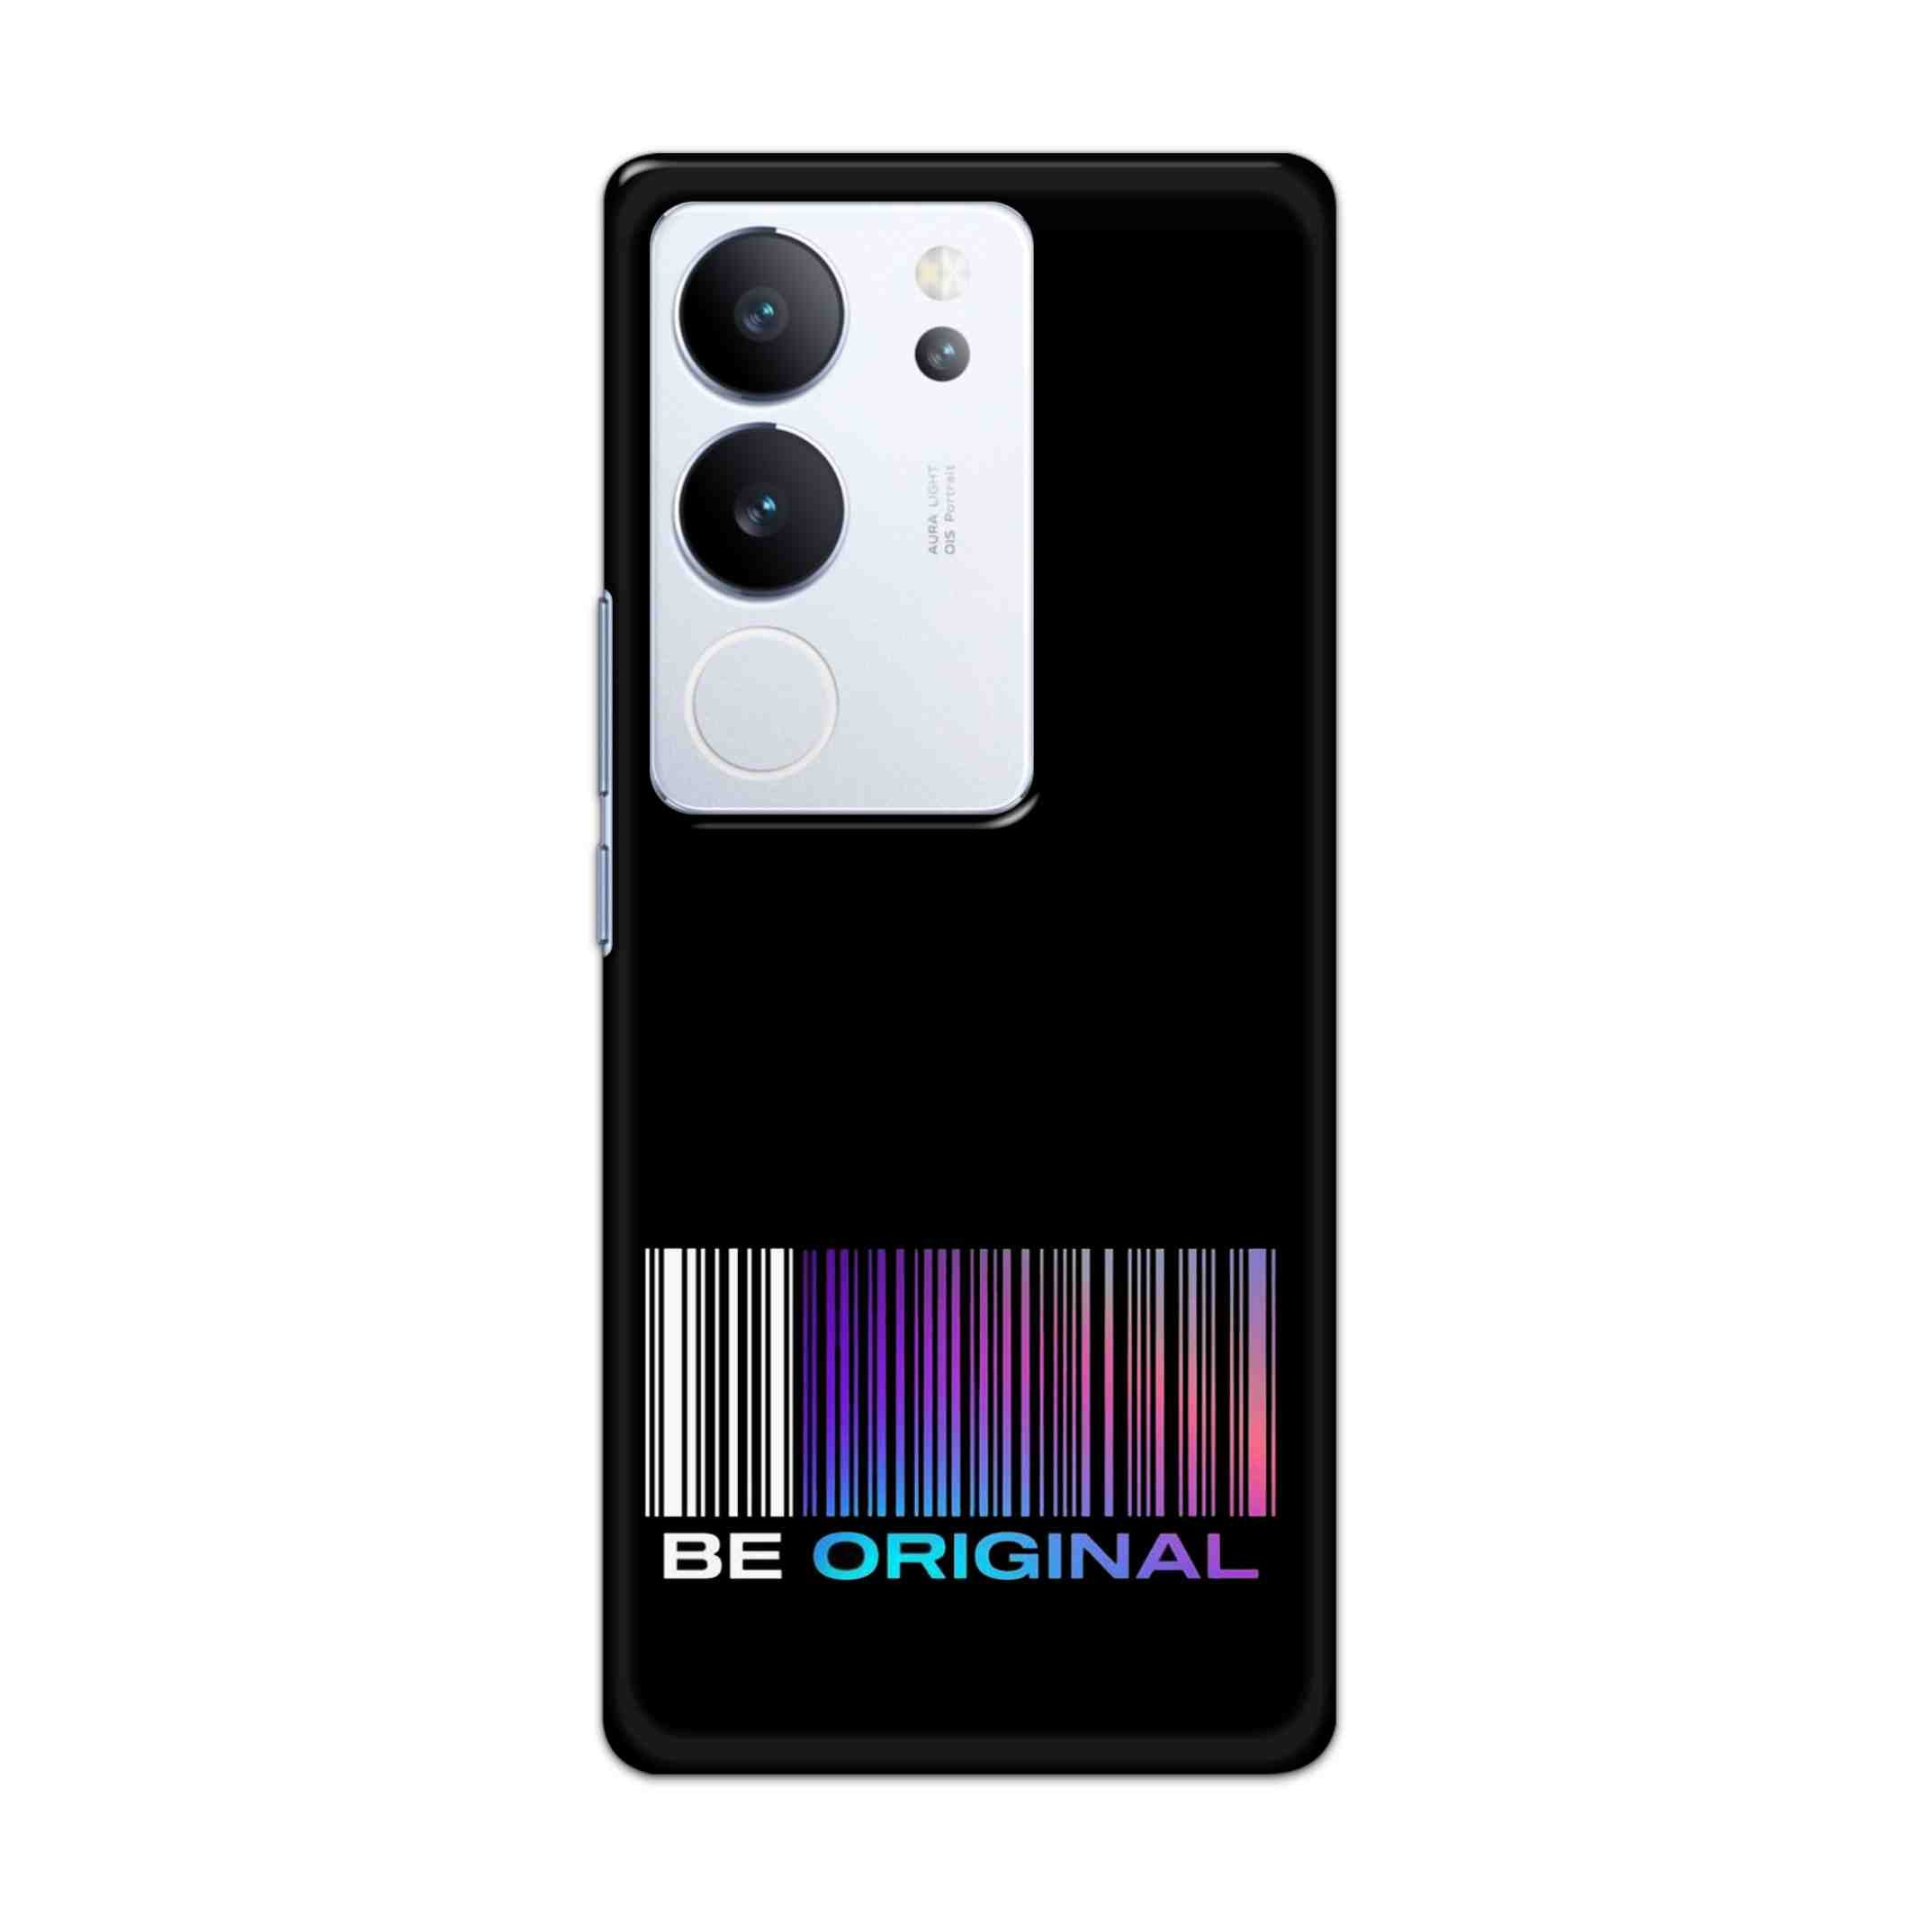 Buy Be Original Hard Back Mobile Phone Case/Cover For Vivo V29 / V29 Pro Online